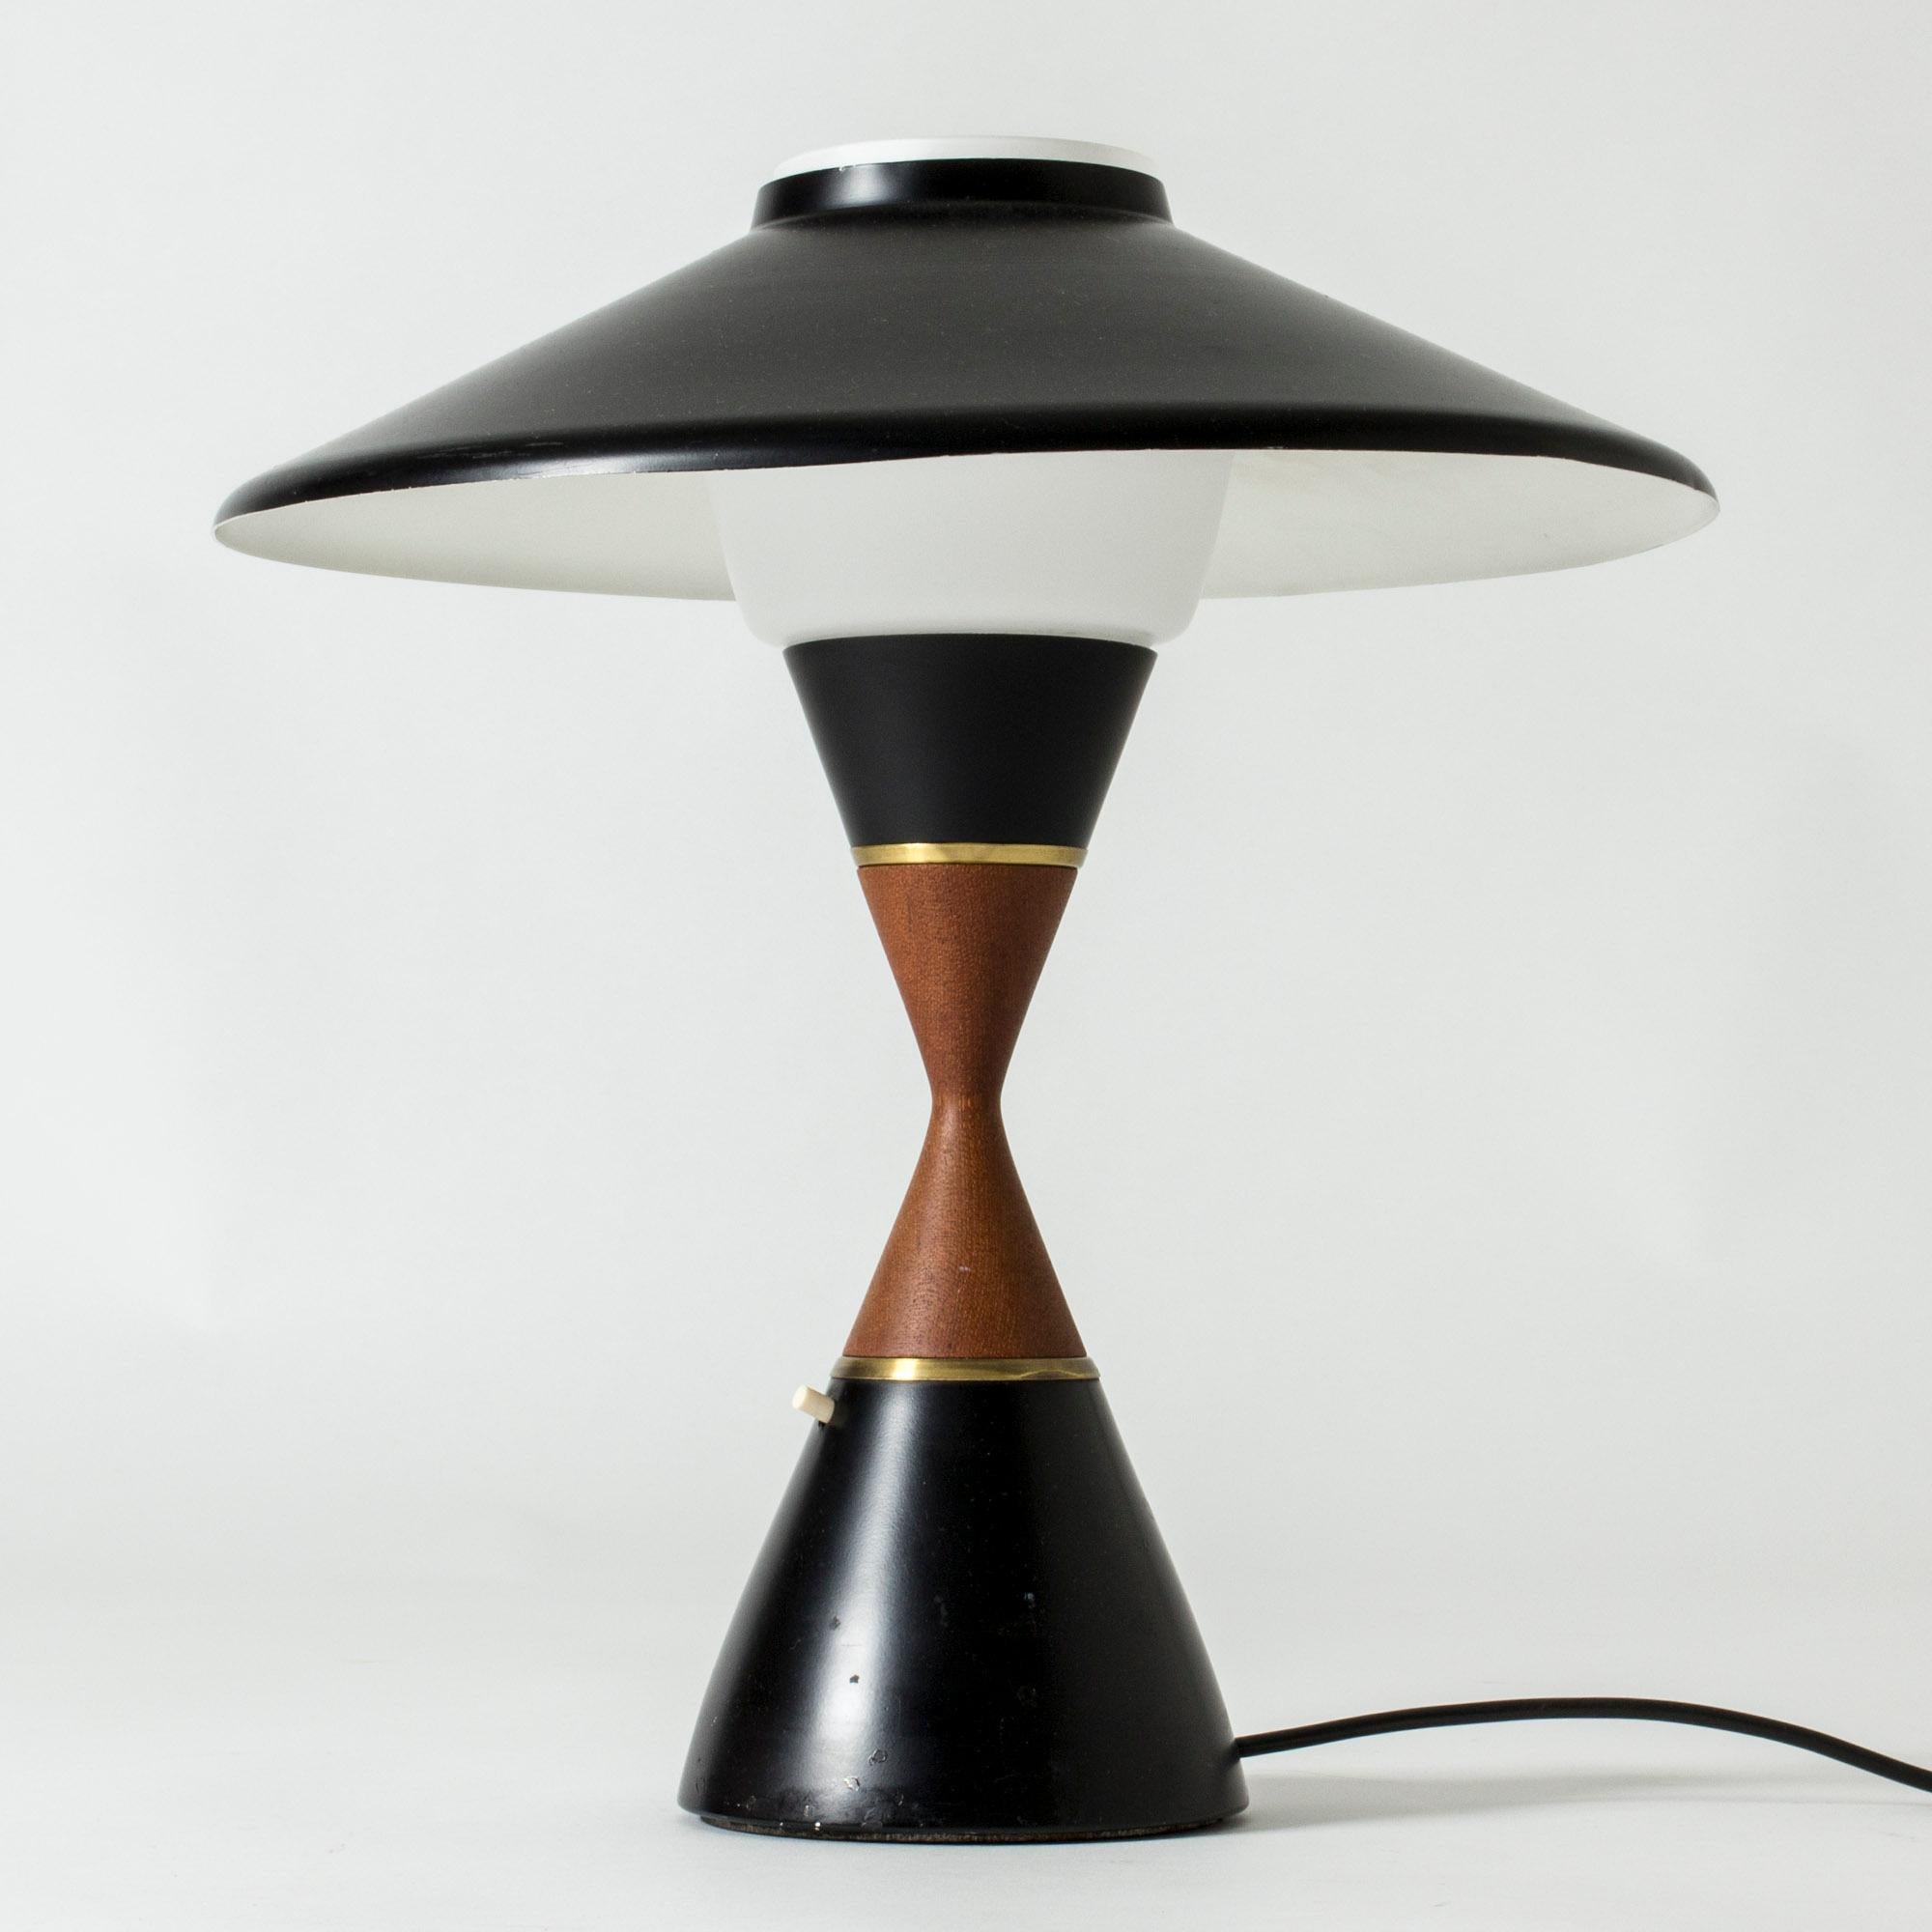 Danish Modernist Table Lamp by Svend Aage Holm Sørensen, Denmark, 1950s For Sale